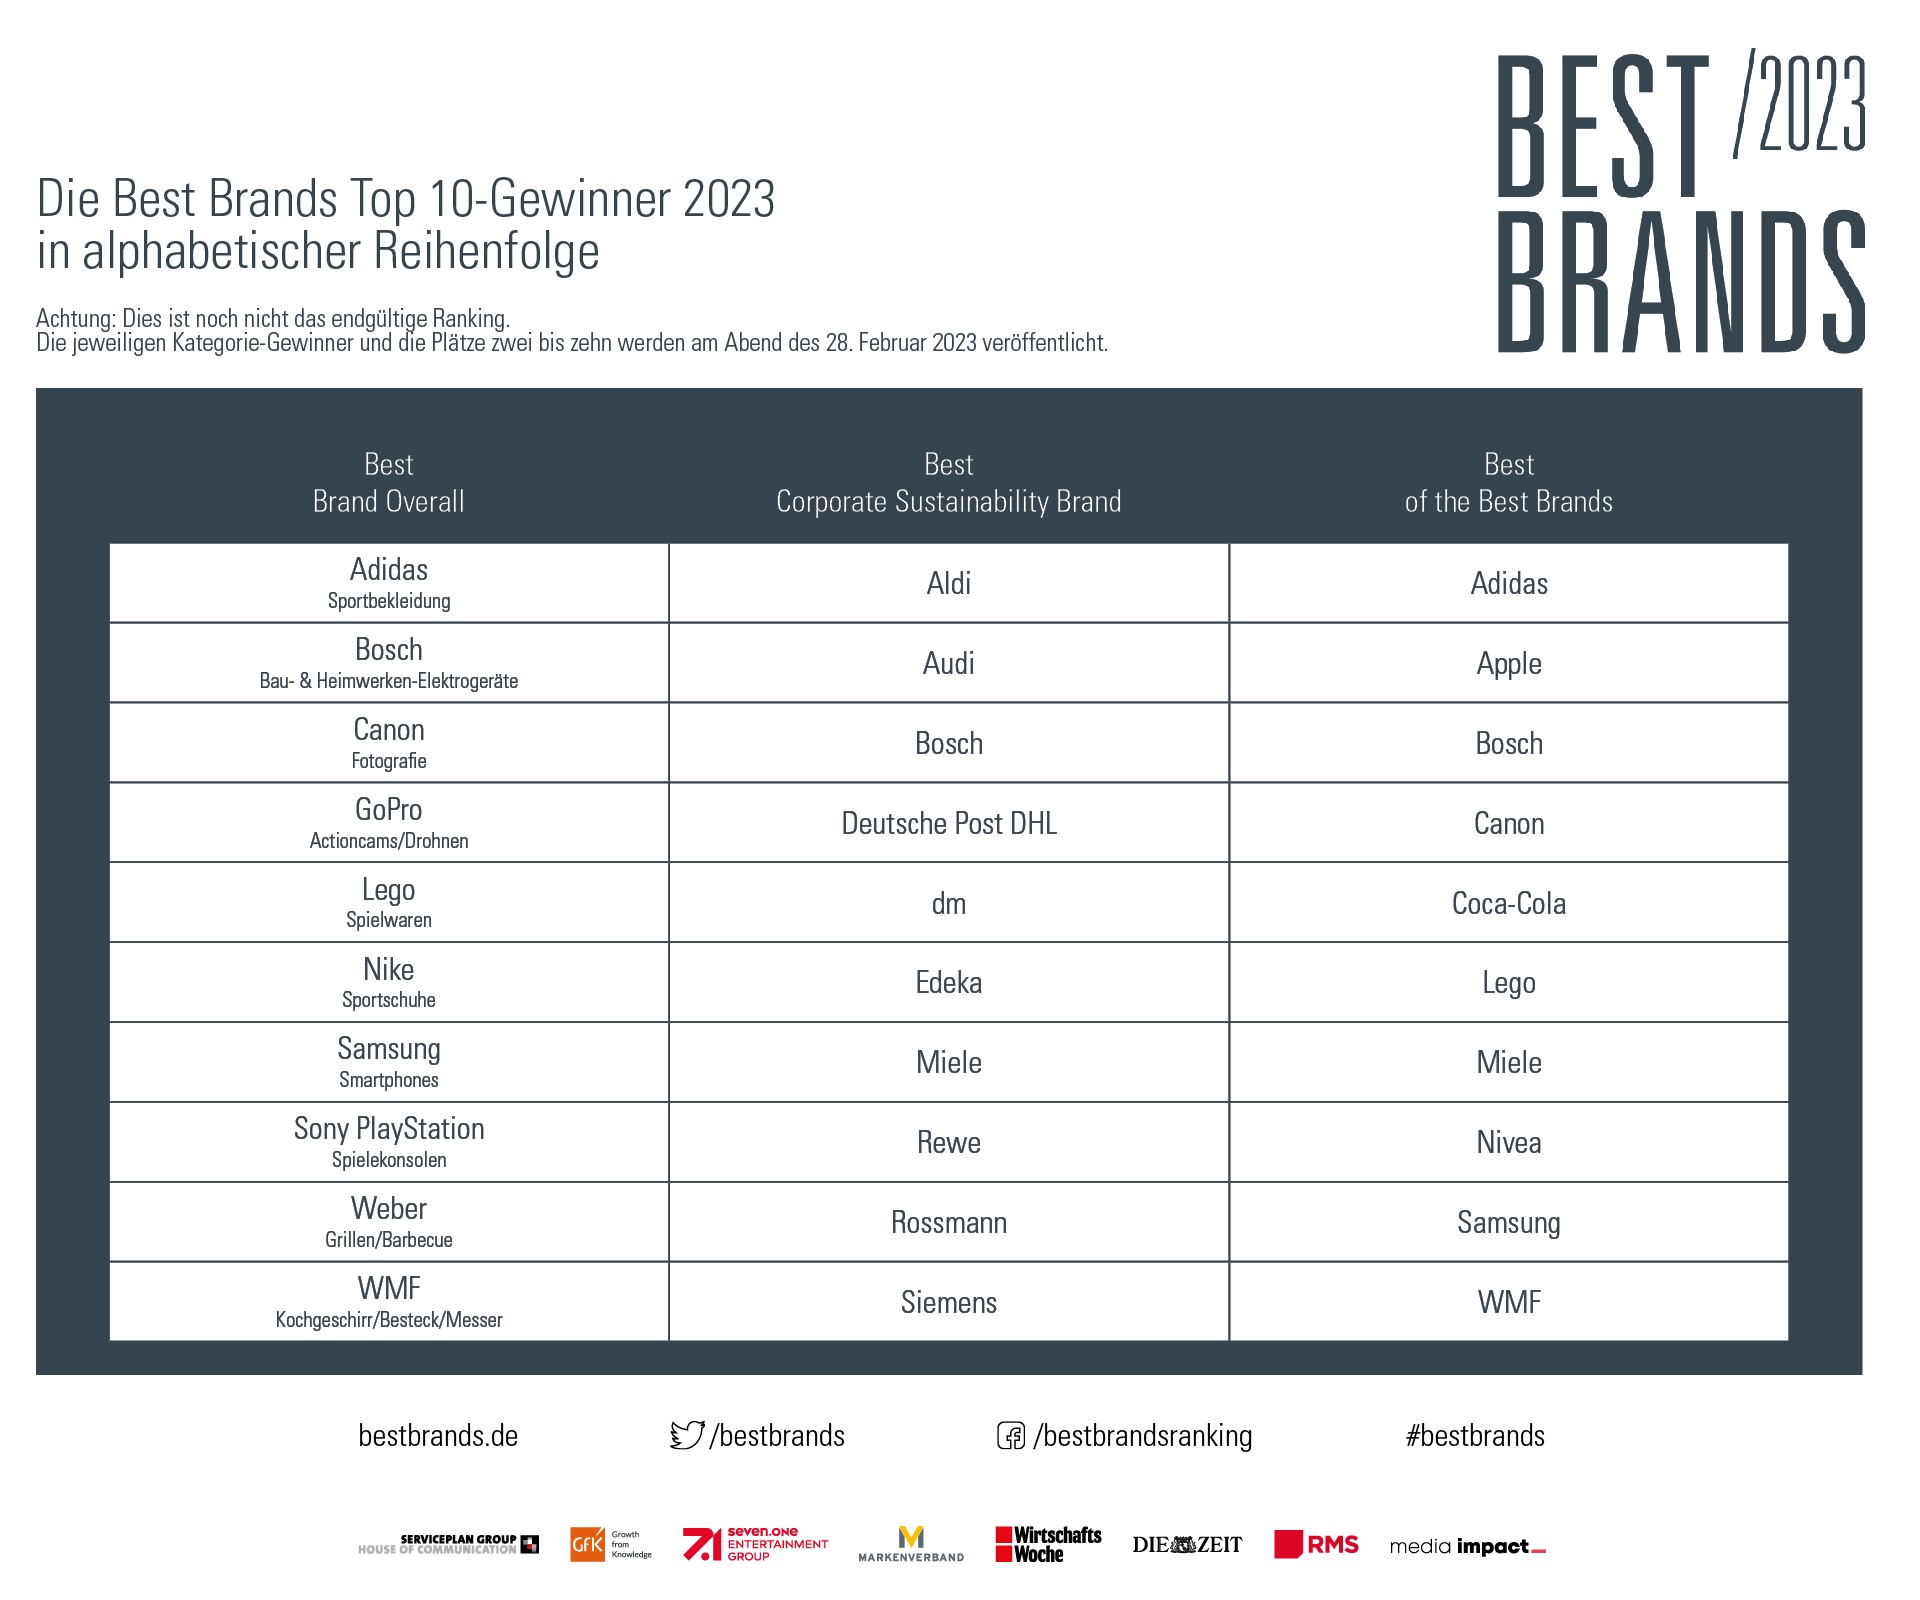 Quelle: Best Brands/Serviceplan Group SE & Co. KG